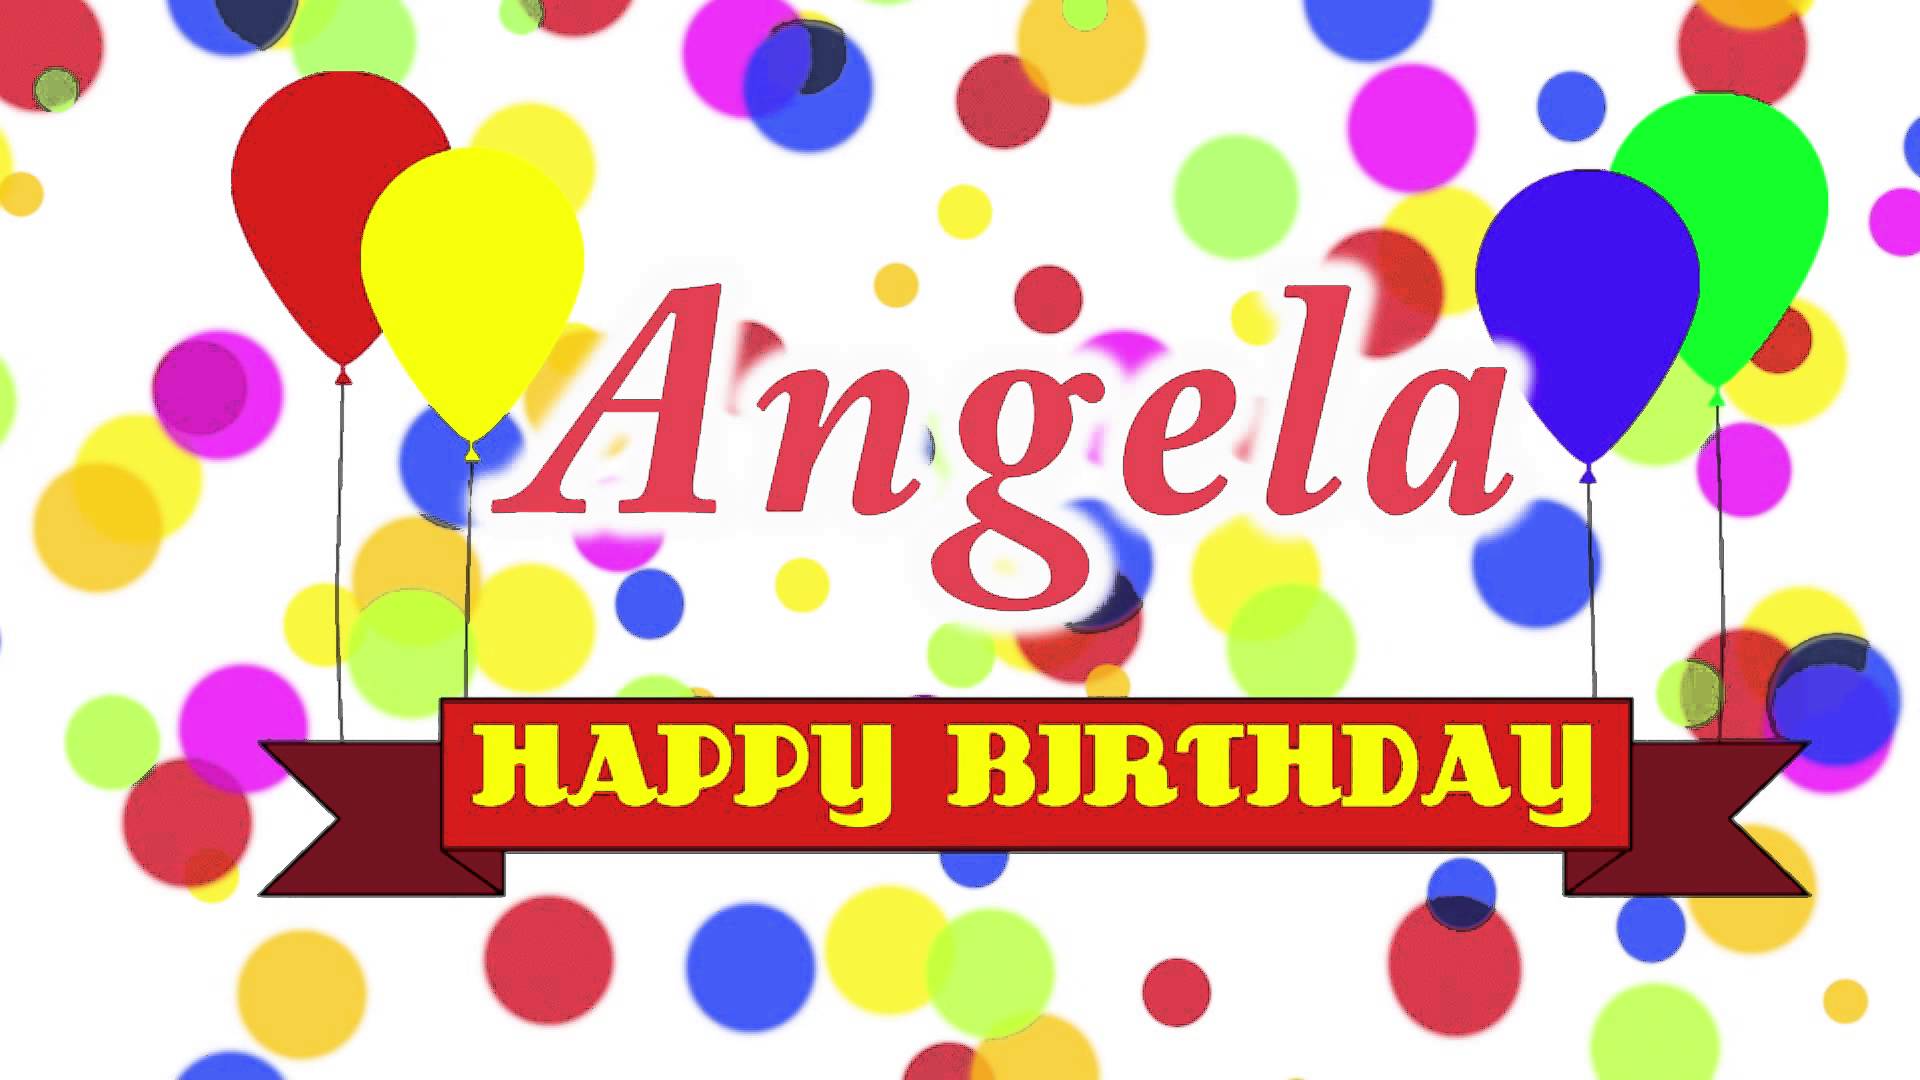 Happy Birthday Angela Song - YouTube